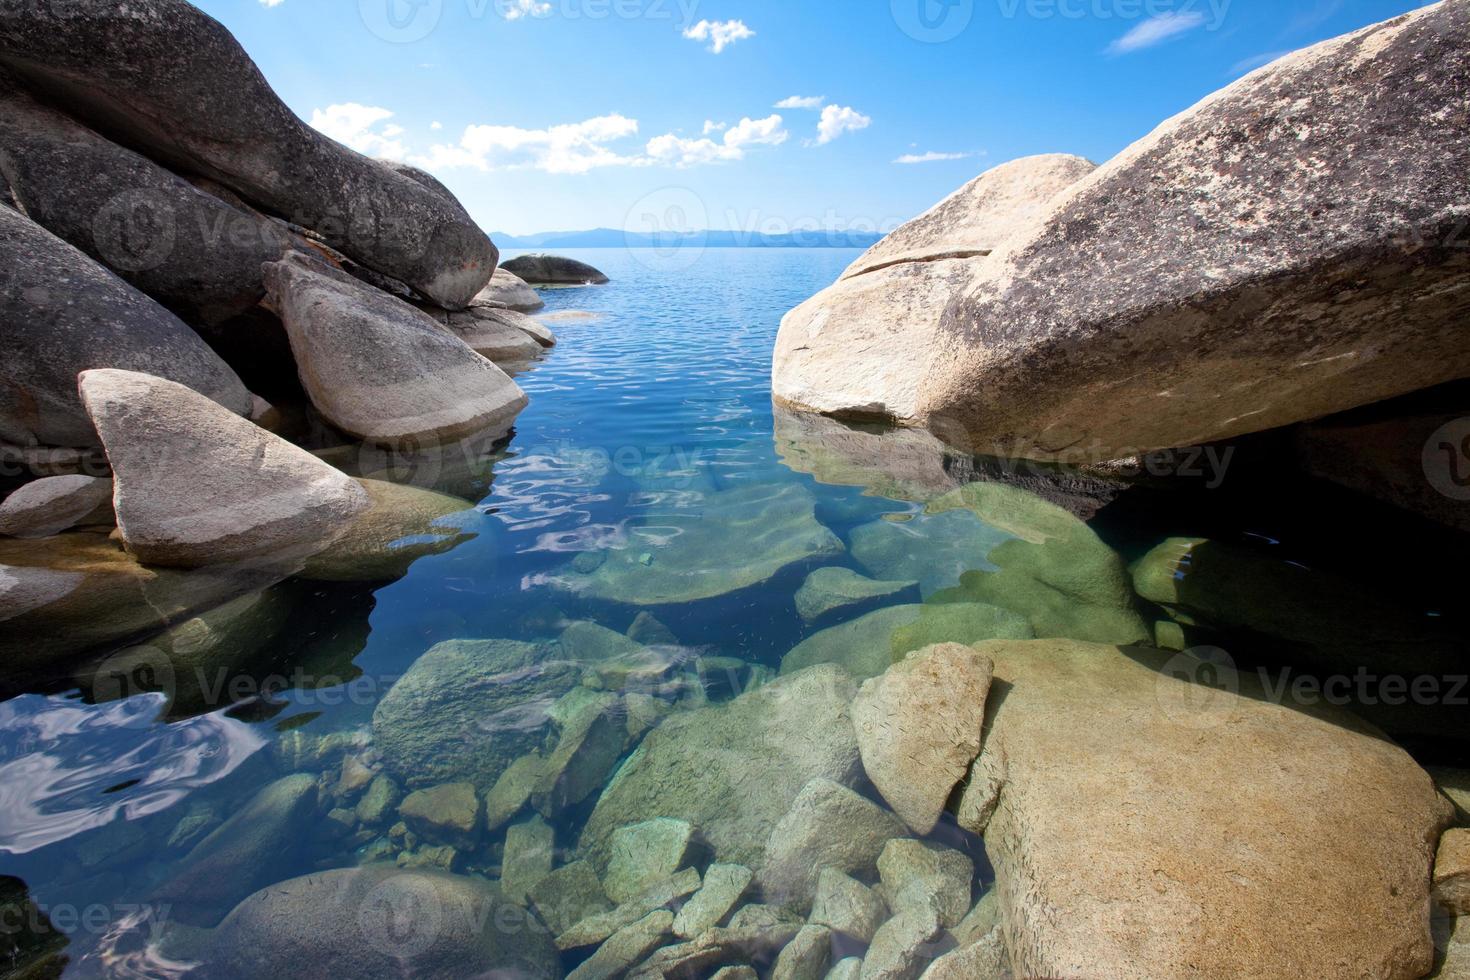 grandes pedras de granito na margem do lago intocado foto